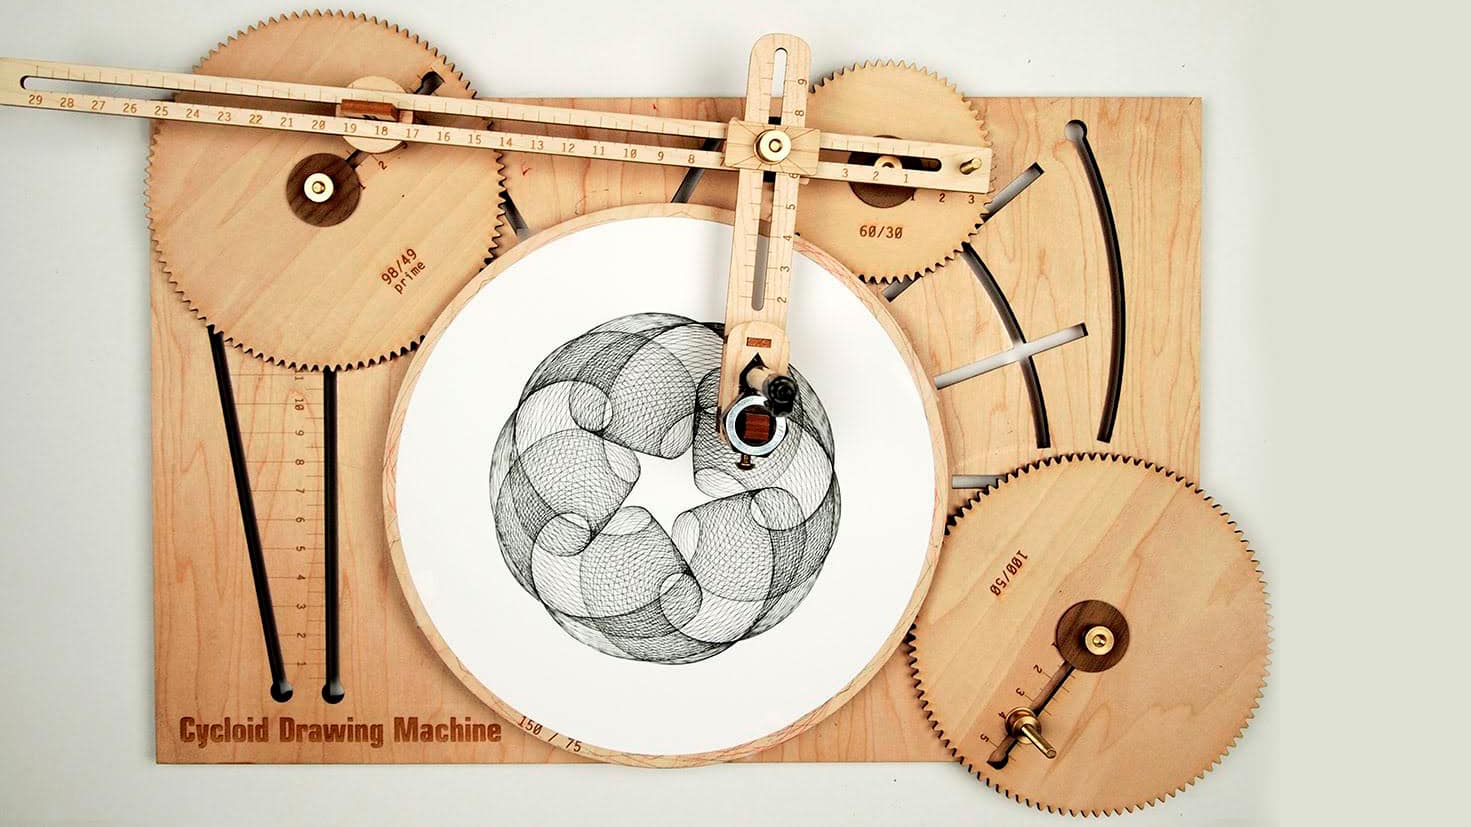 Joe Freedman's Amazing Cycloid Drawing Machine, Article